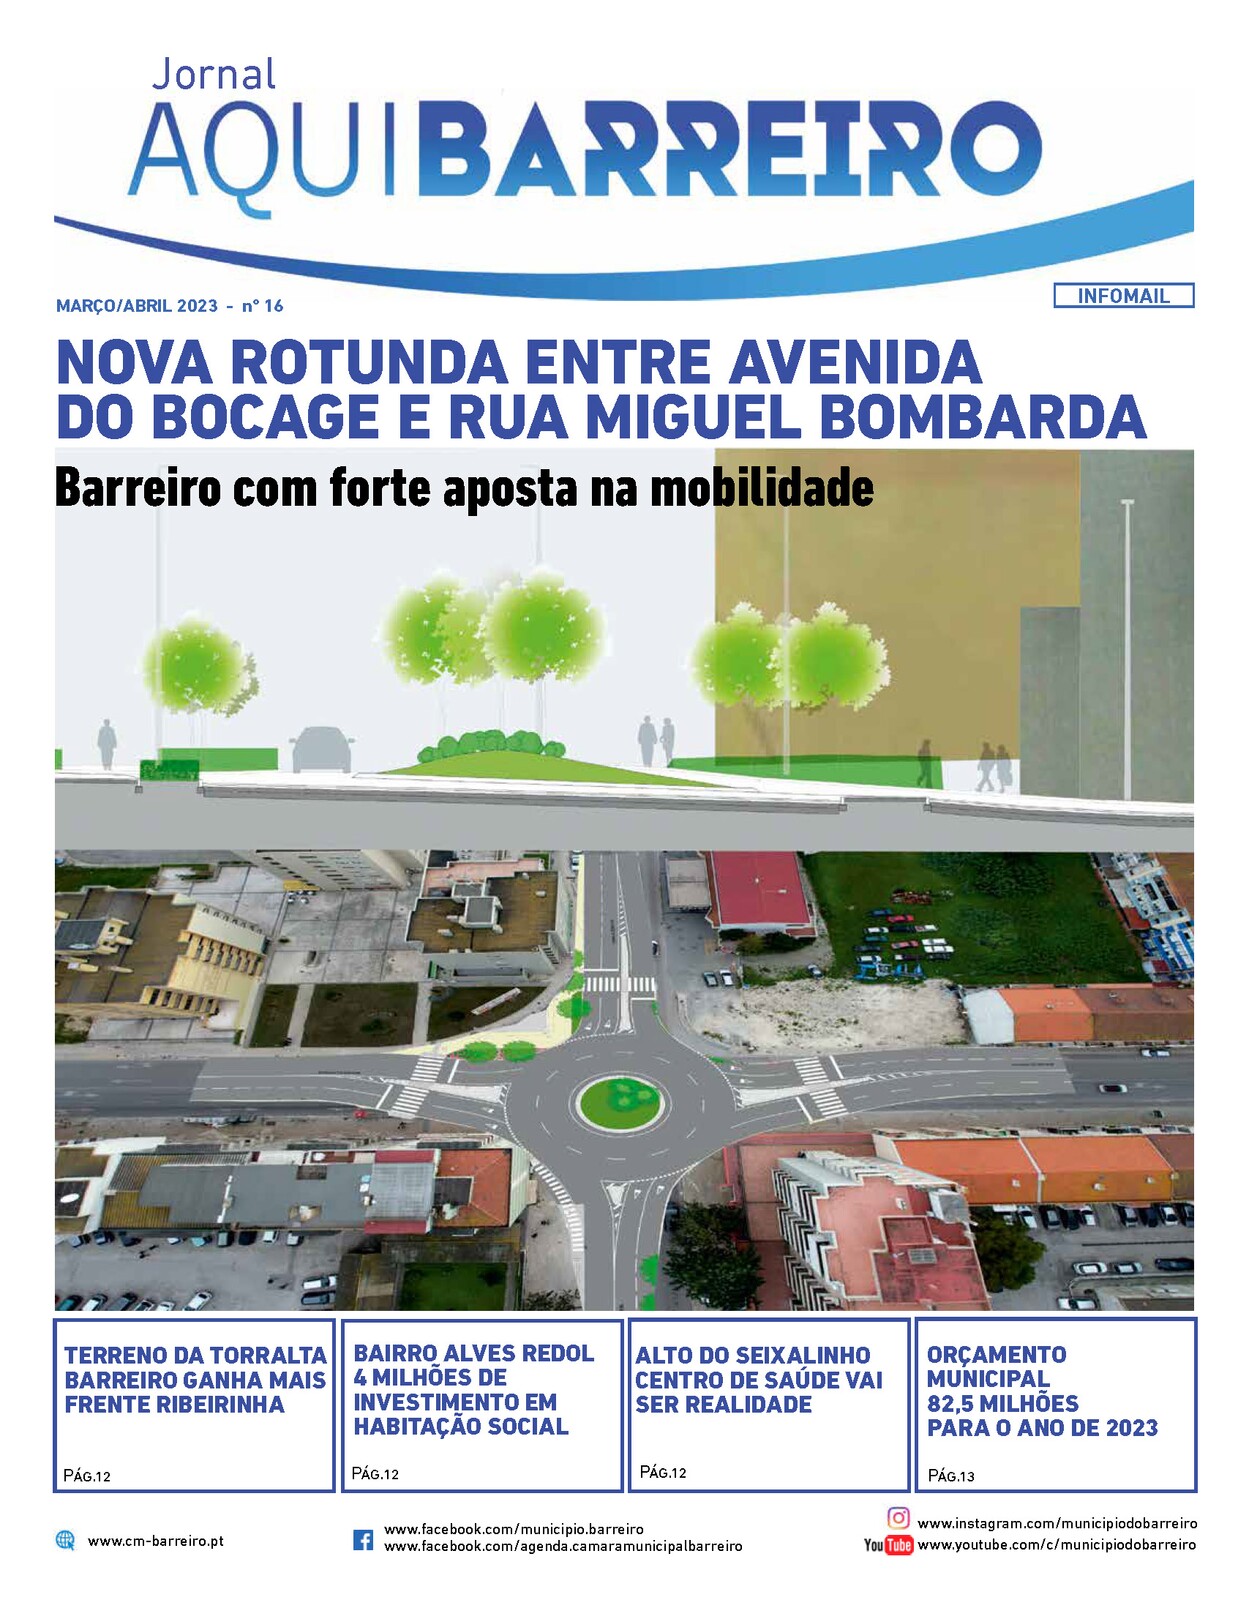 Jornal Municipal “Aqui Barreiro” março/abril já disponível